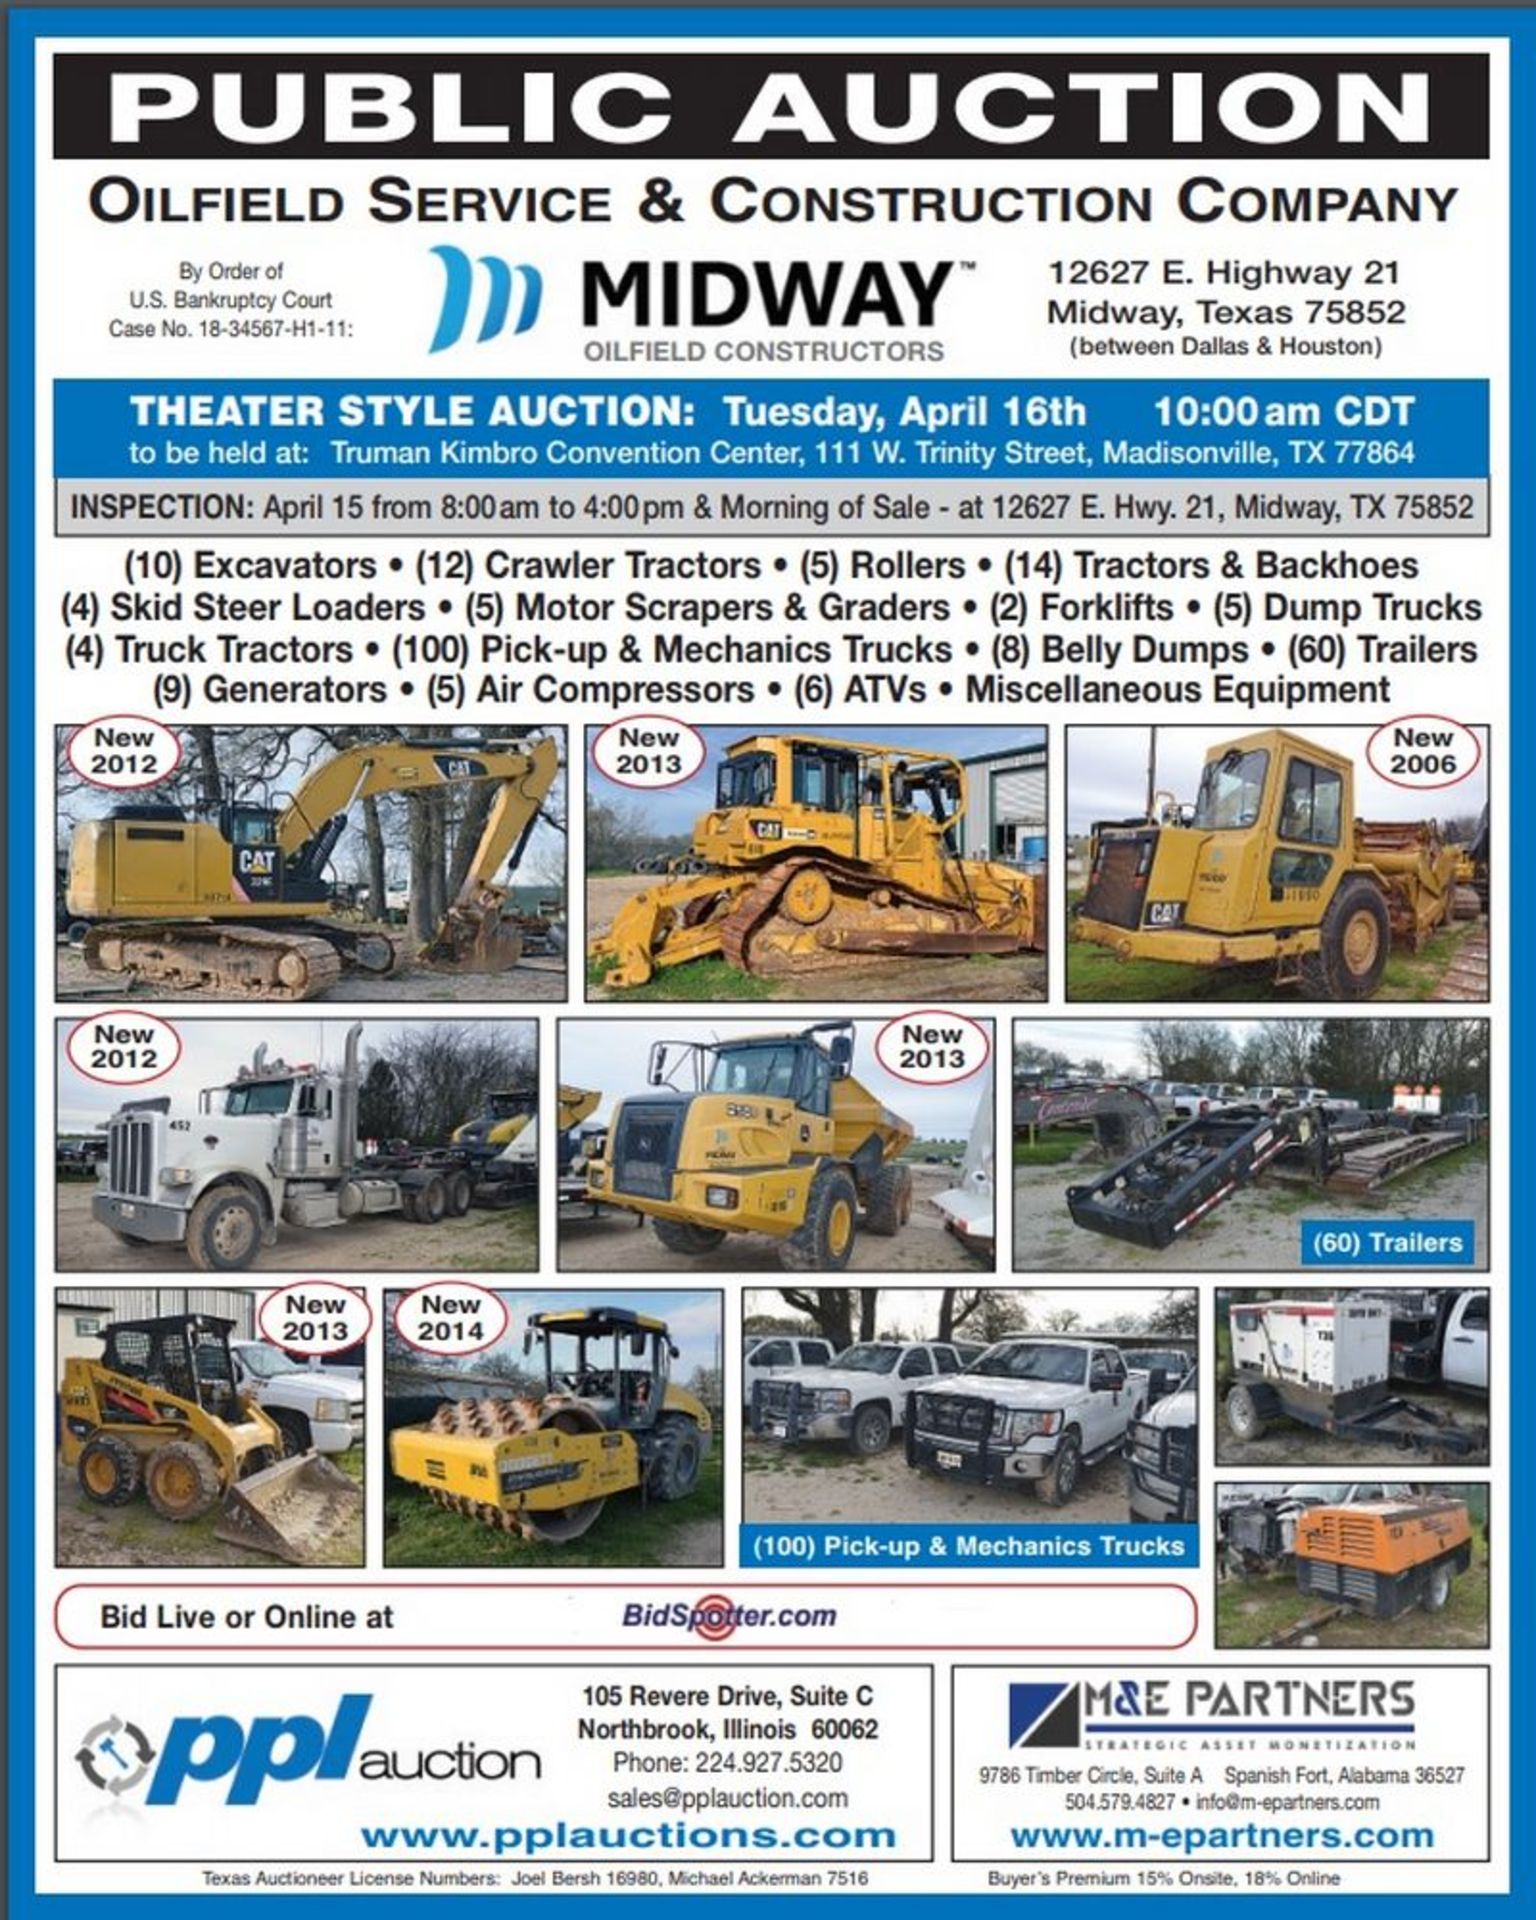 OILFIELD SERVICE & CONSTRUCTION COMPANY